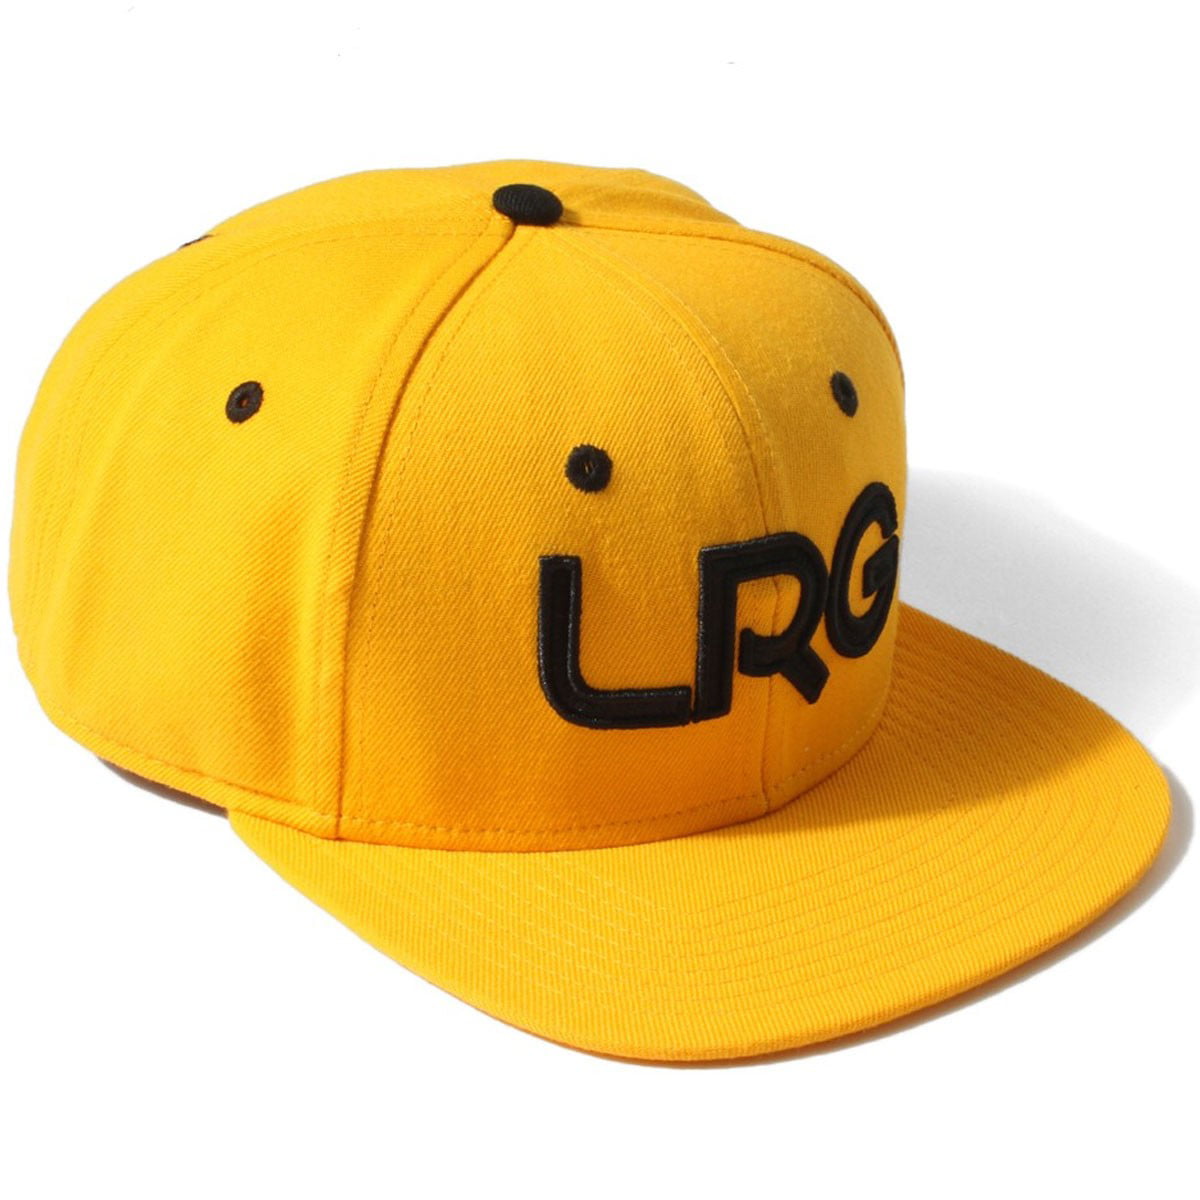 LRG Gold Yellow Structured Flat Bill Snapback Adjustable Hat Cap ...